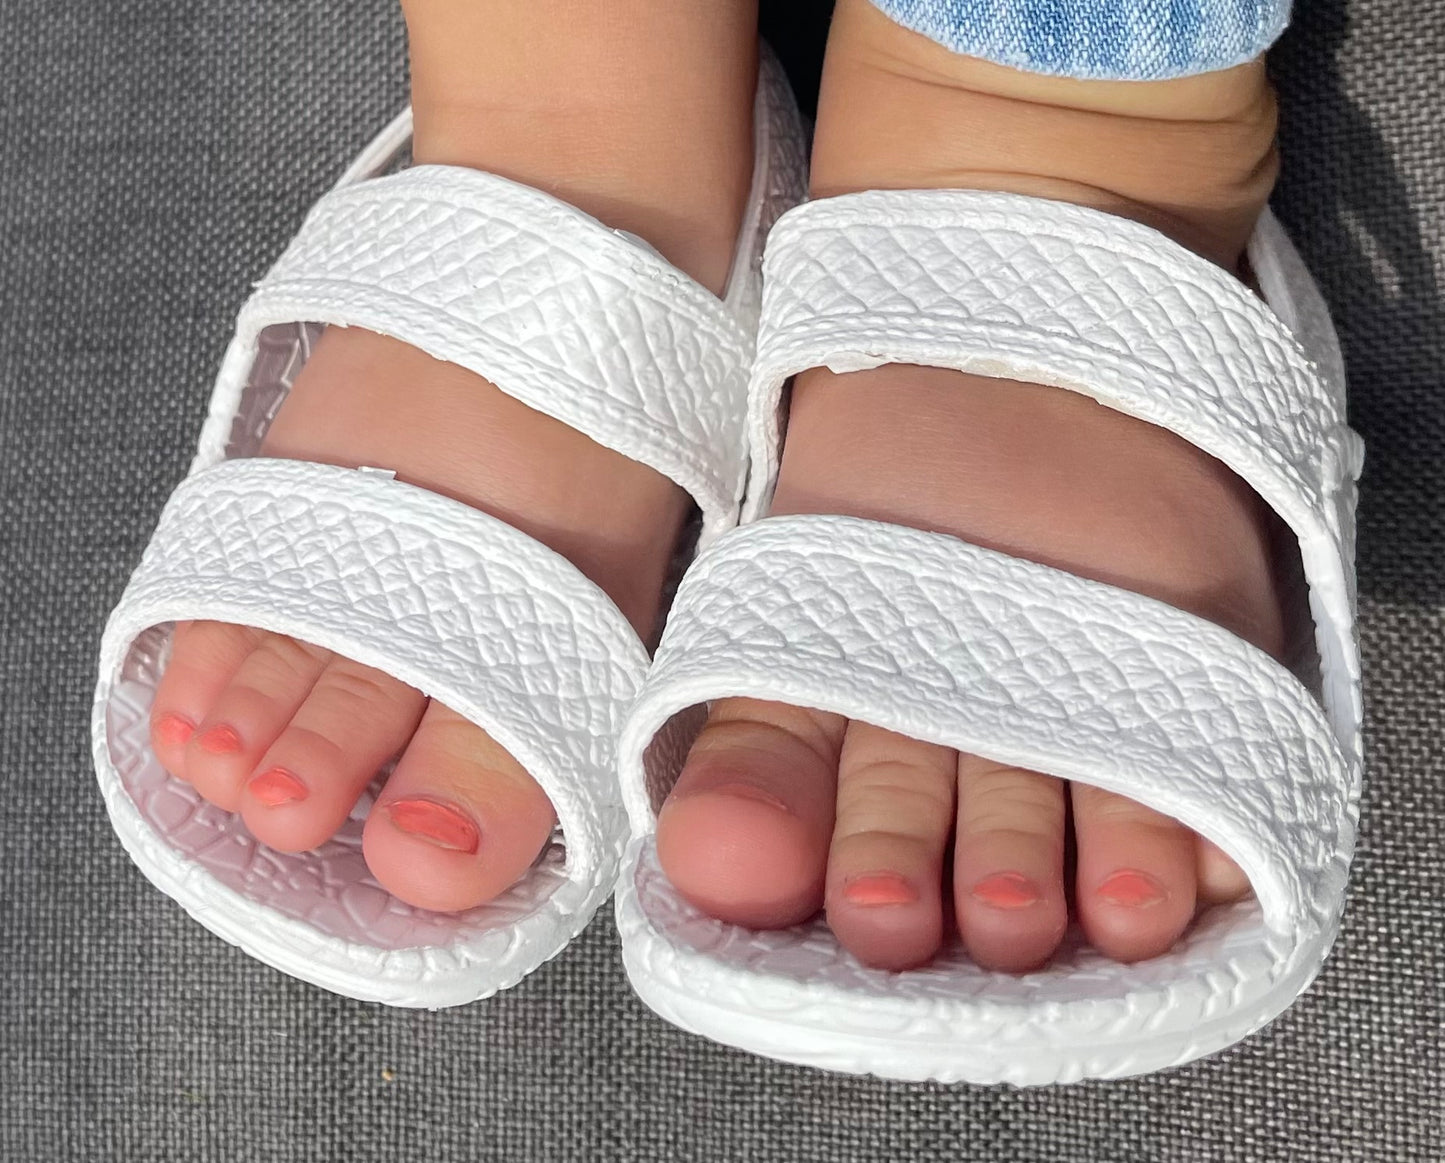 Sandalias hawaianas j-slips para niñas en blanco concha marina